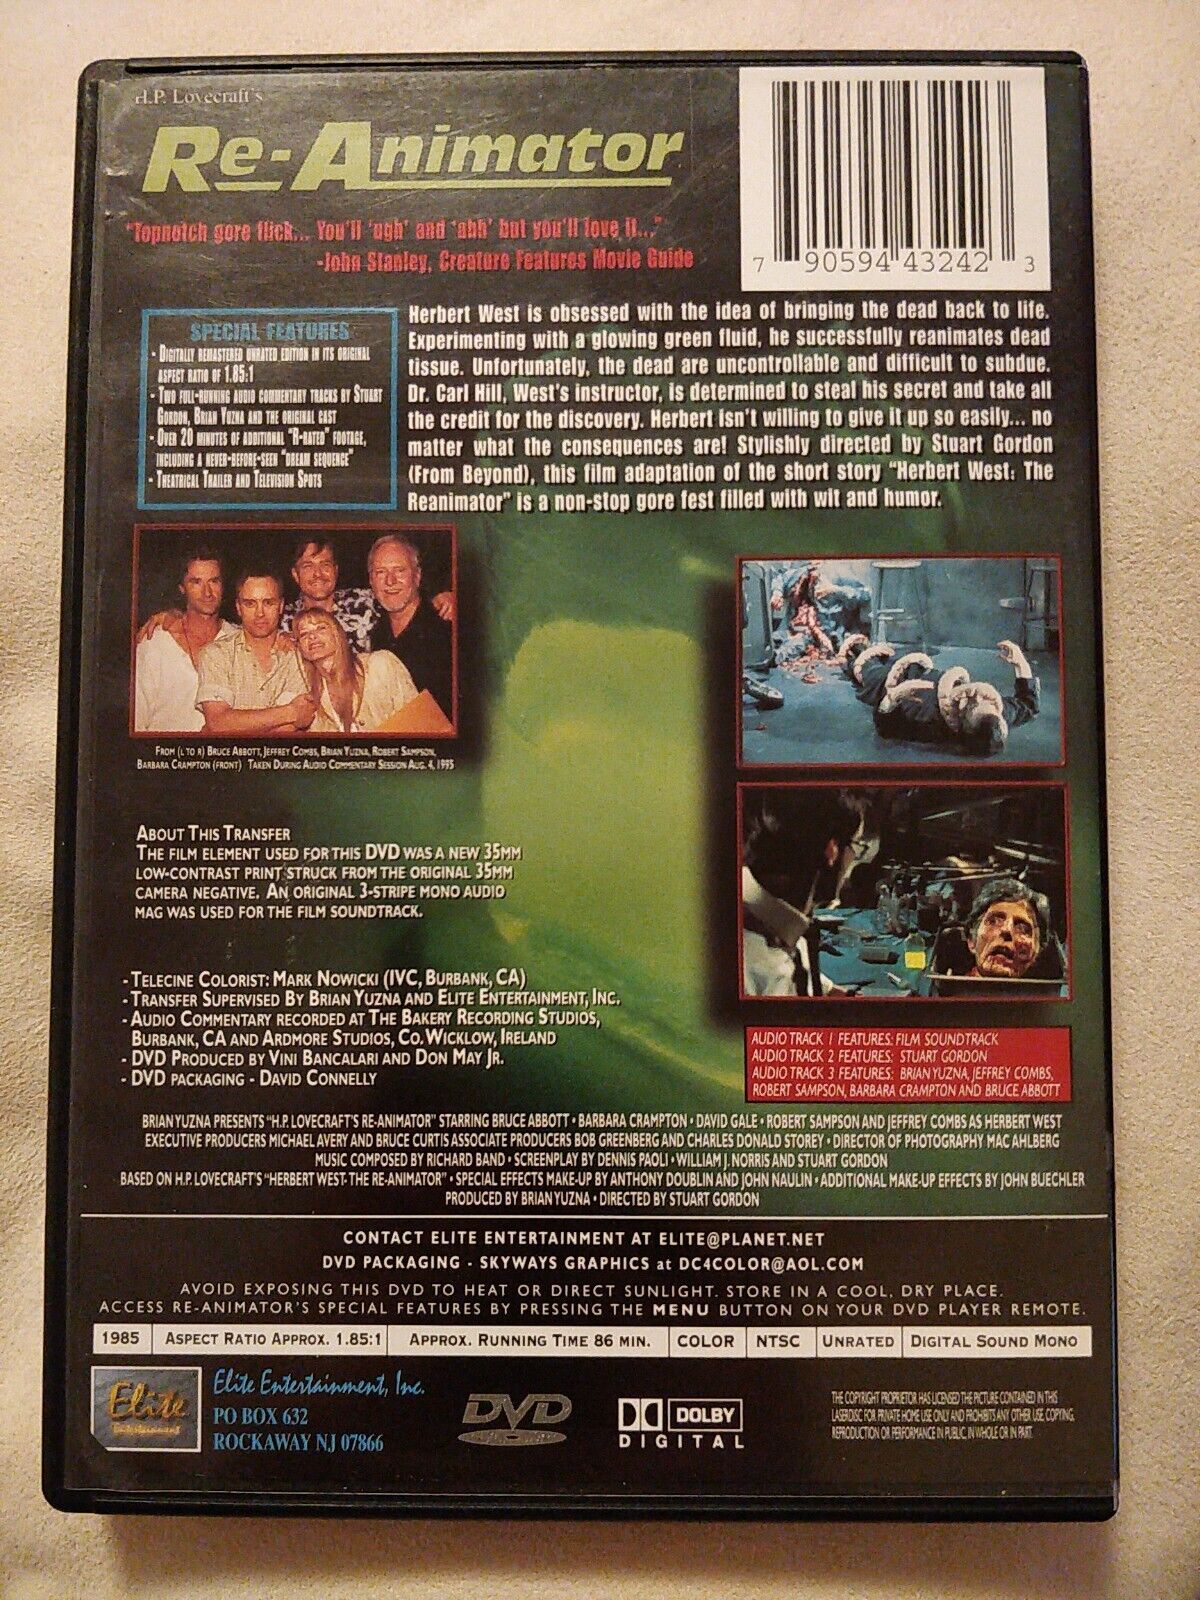 Re-Animator (DVD, 1997, Special Edition) 790594432423 | eBay